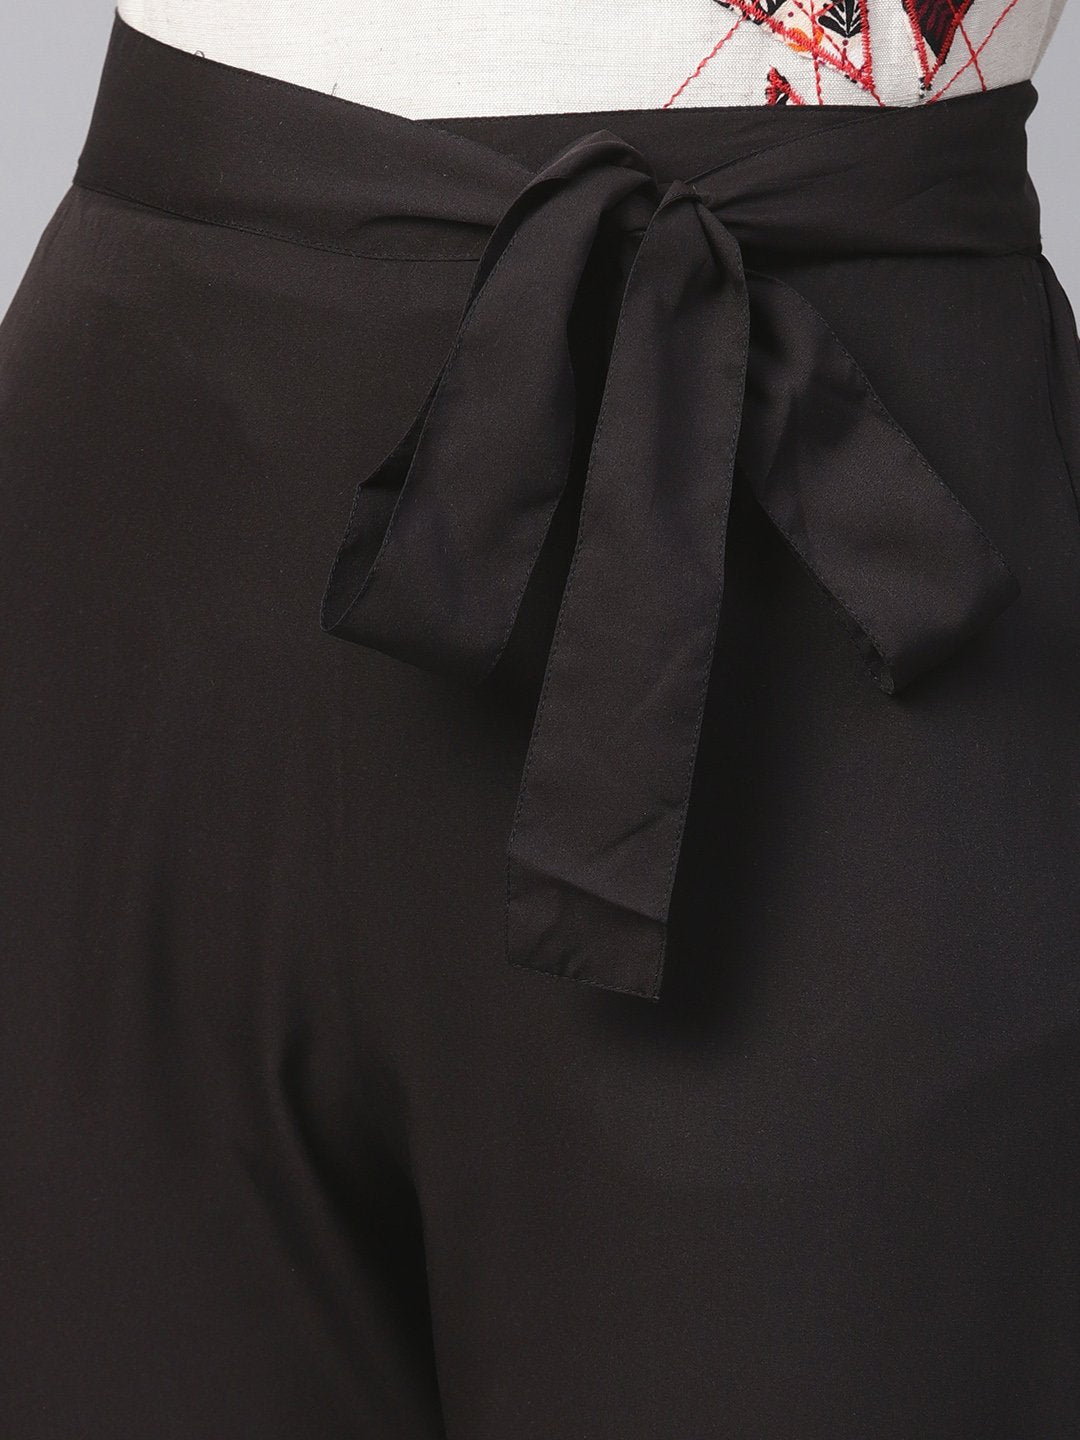 Women's Solid Black Knot Style Capri Pant - Nayo Clothing